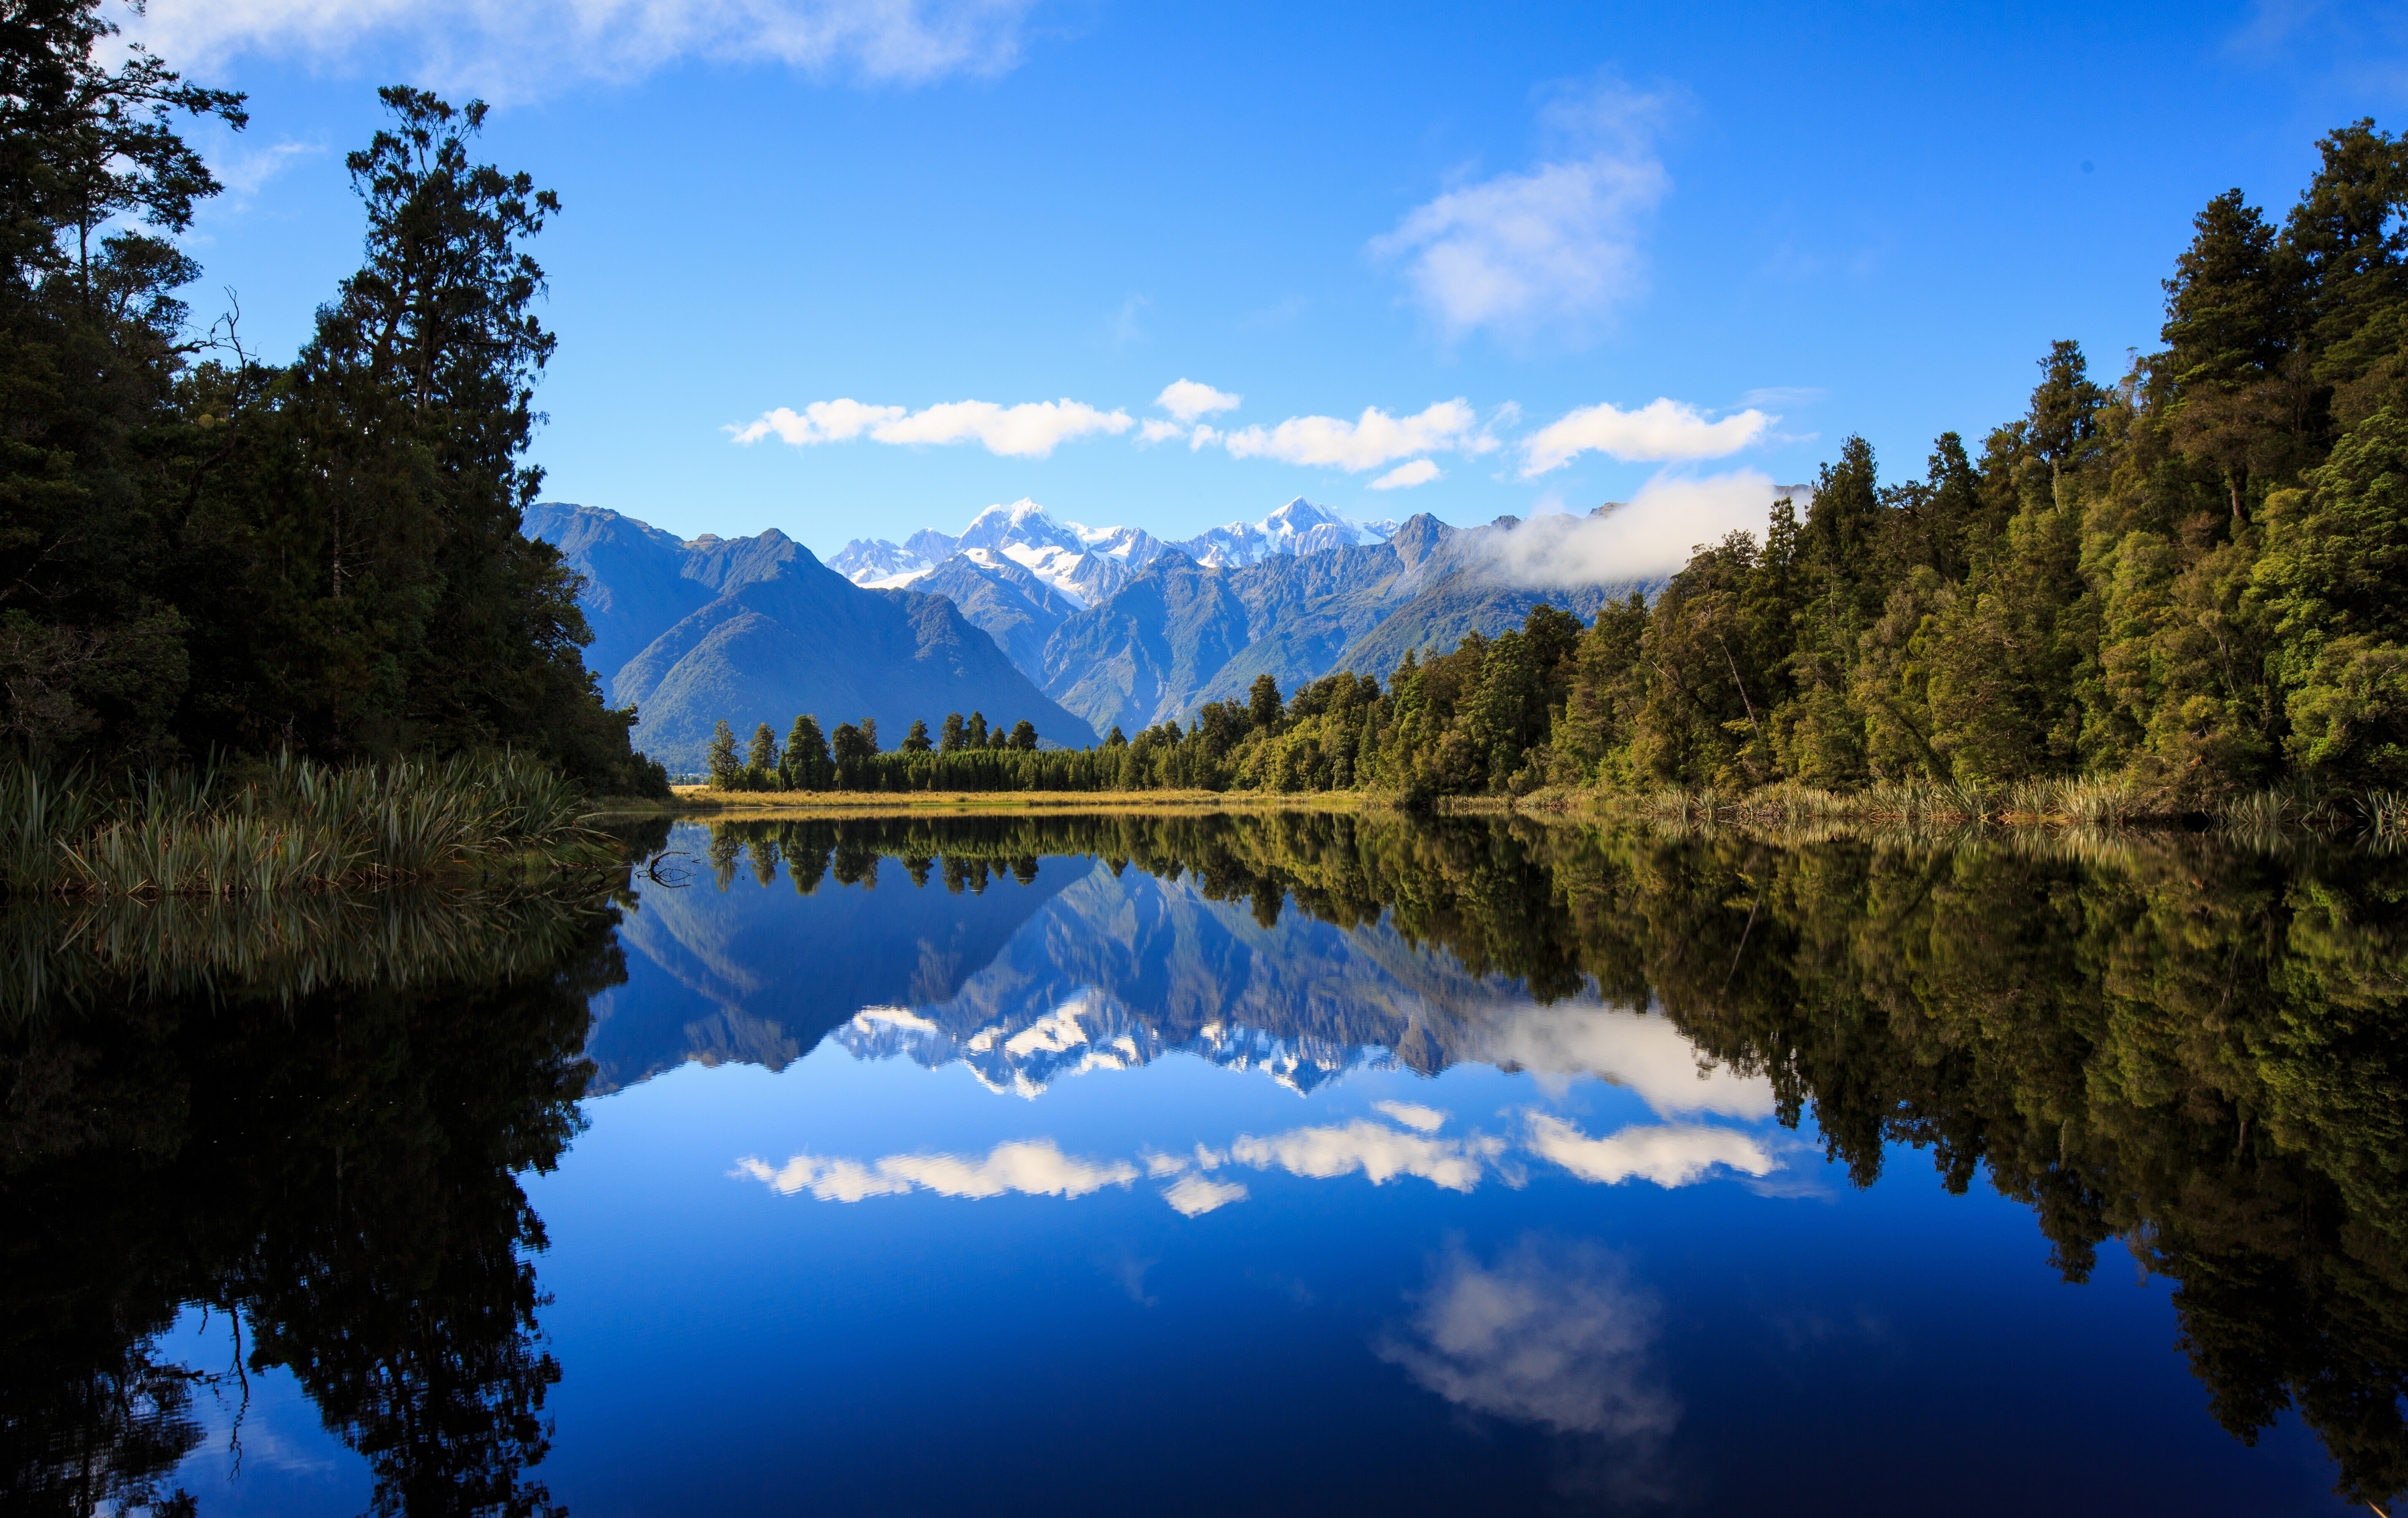 Картинки рек и озер. Озеро Мэтисон. Озеро Мэтсон, новая Зеландия. Река Новозеландия. Озера новой Зеландии.